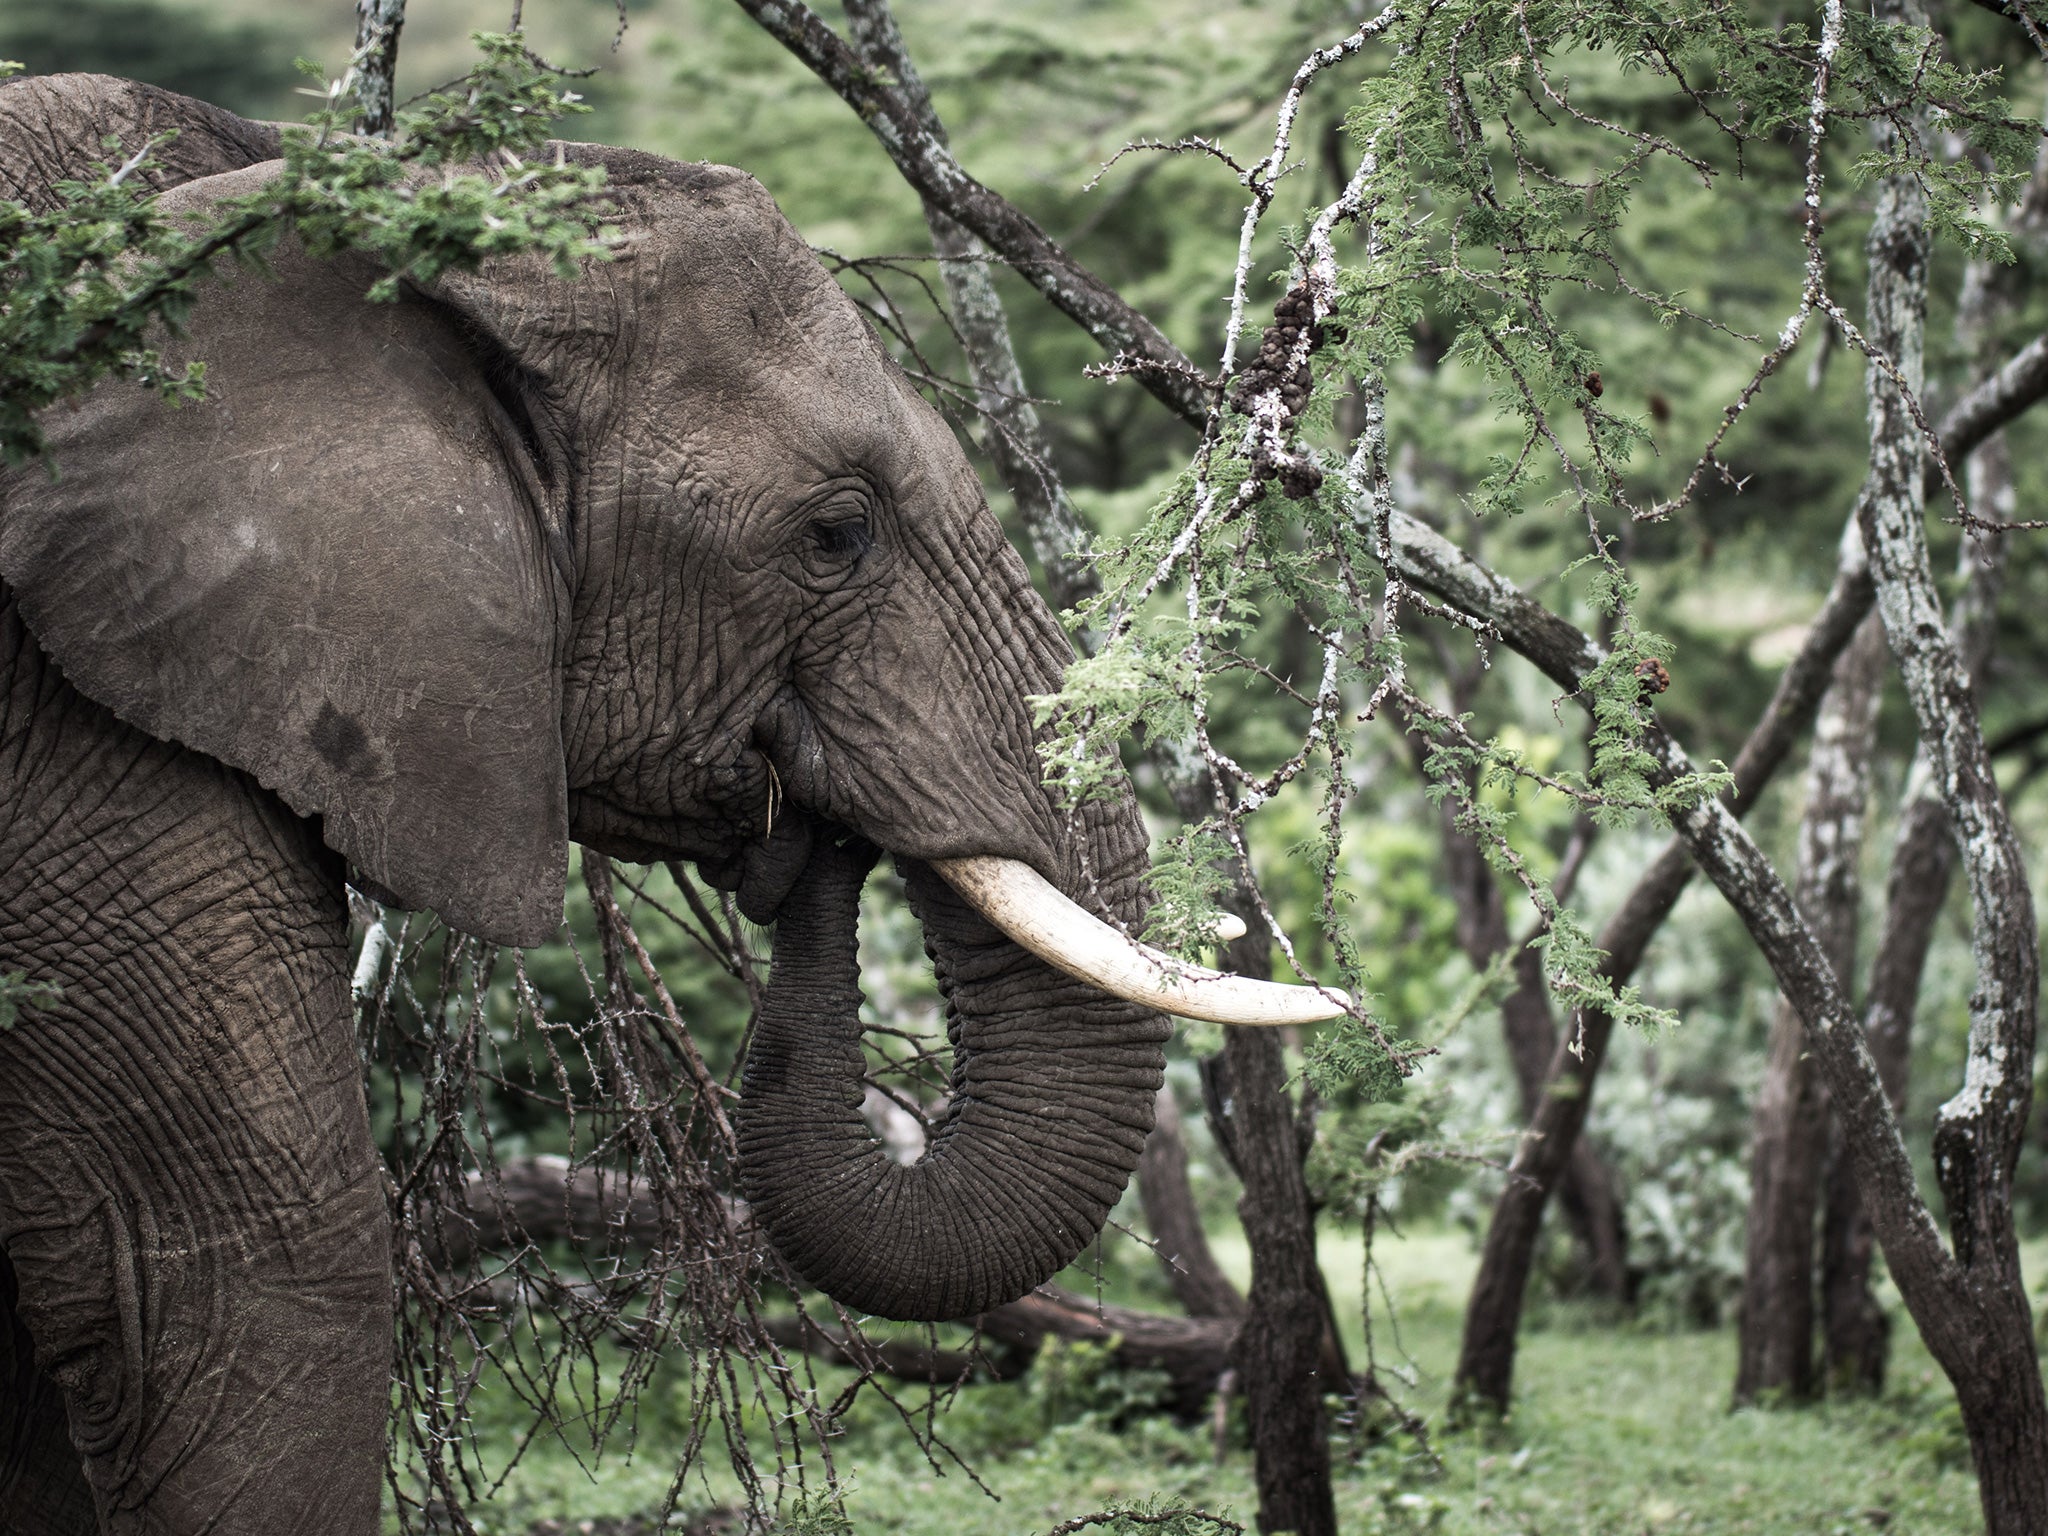 An African Elephant feeds on an Acacia tree in the Ol Kinyei Conservancy in Kenya's Maasai Mara